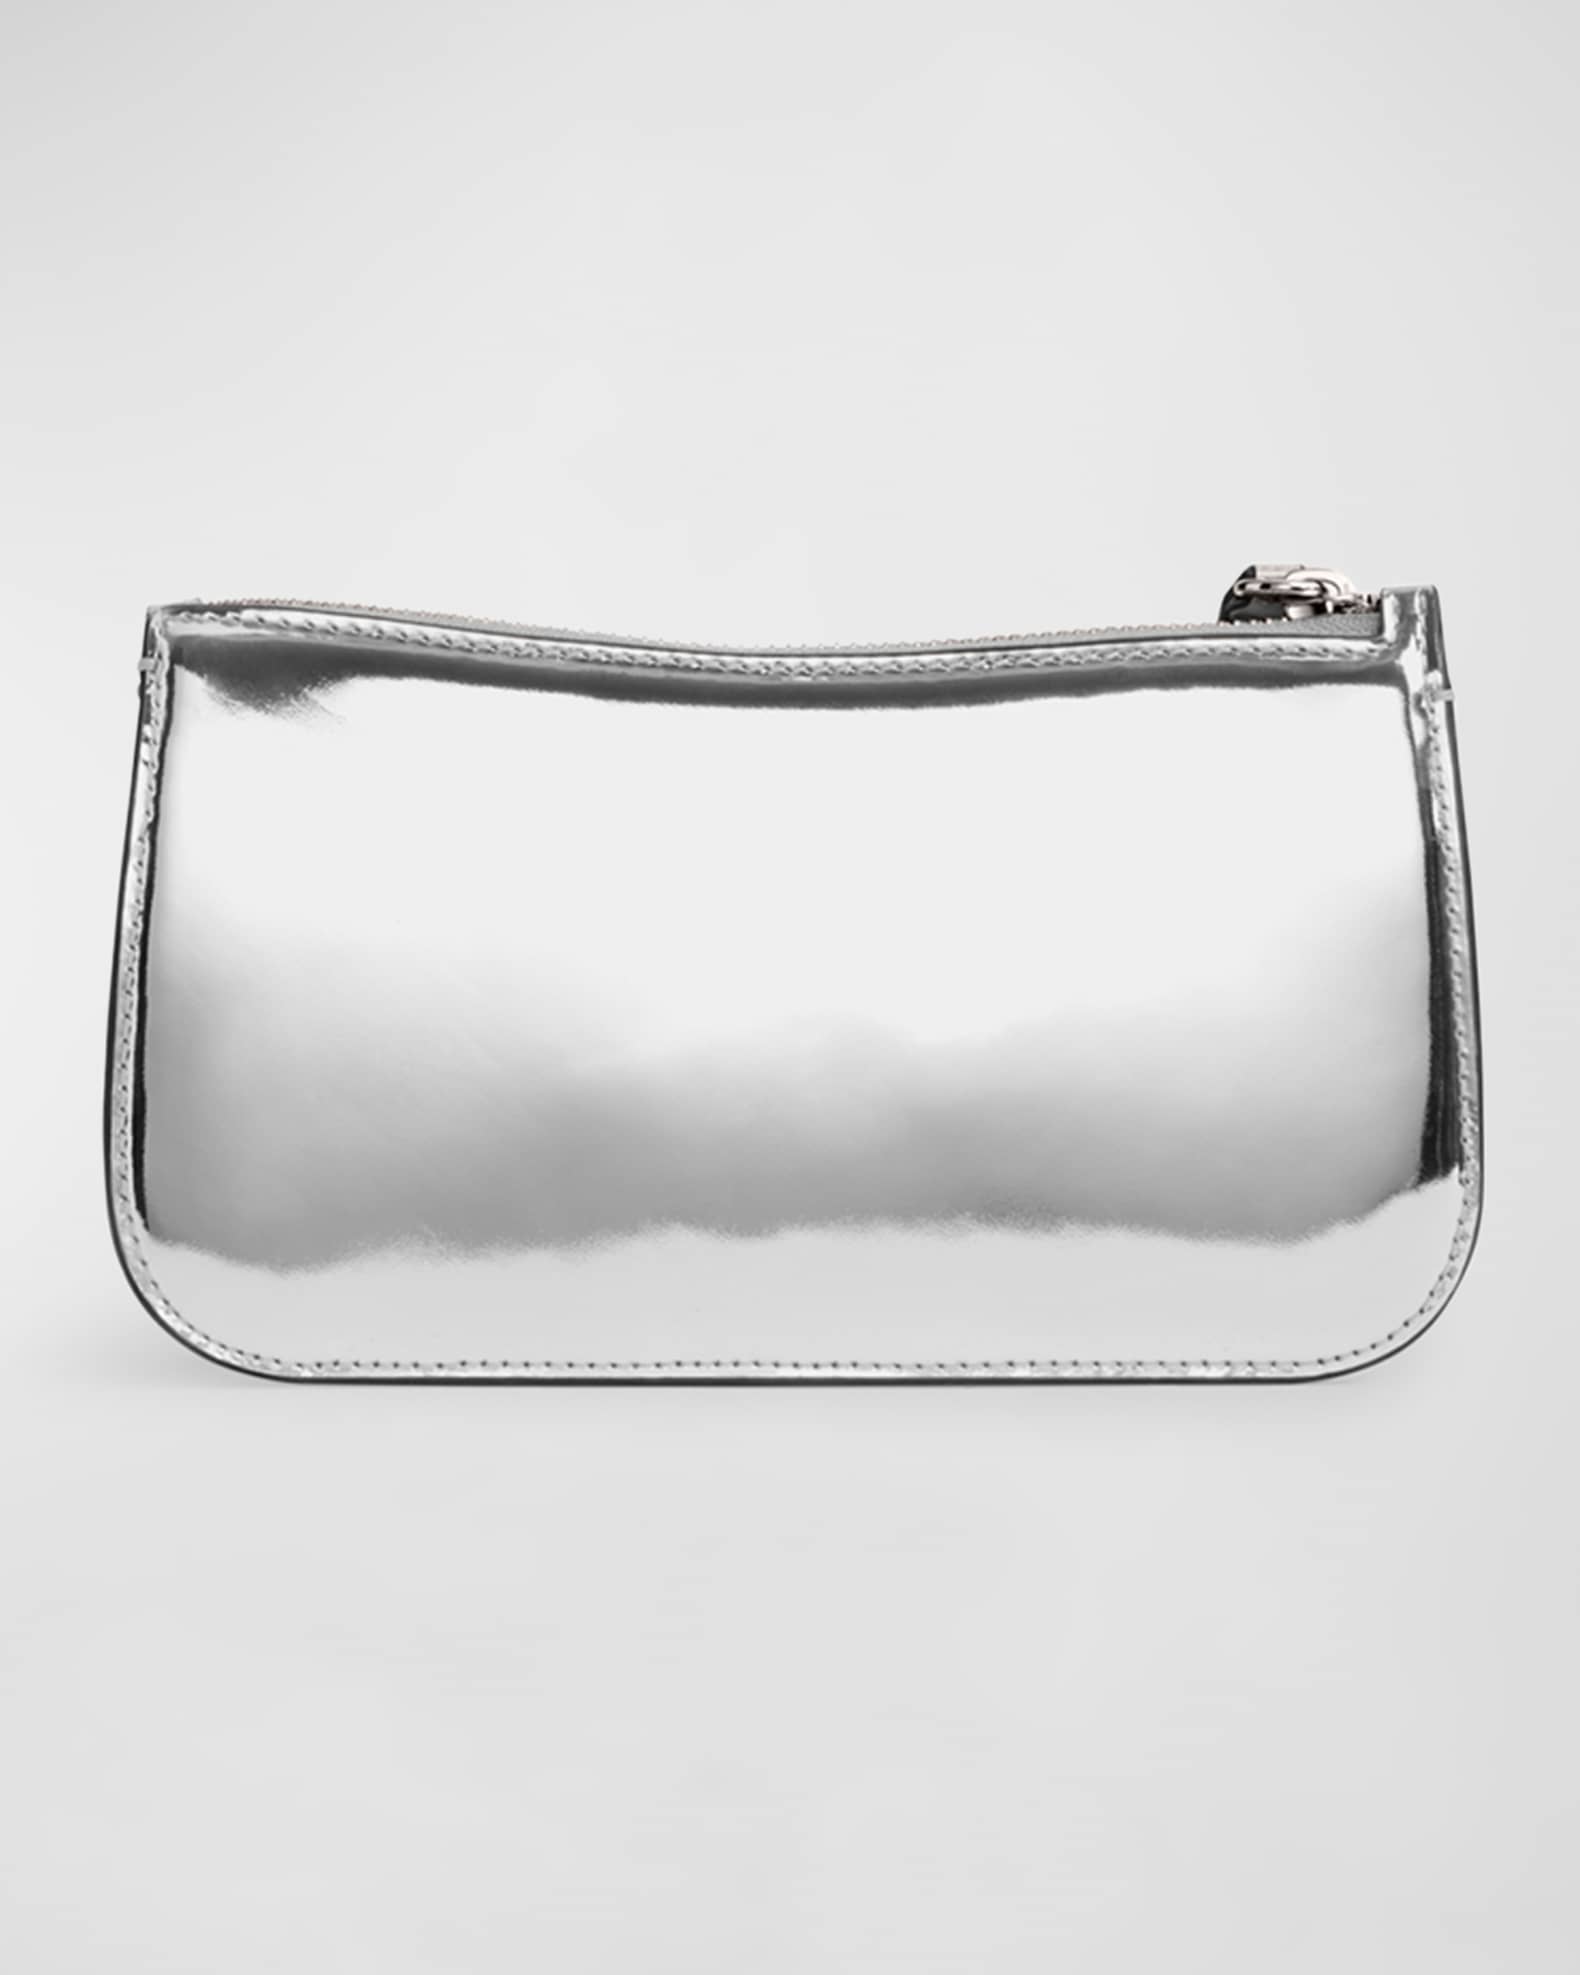 COACH Penn Shoulder Bag In Silver Metallic in White